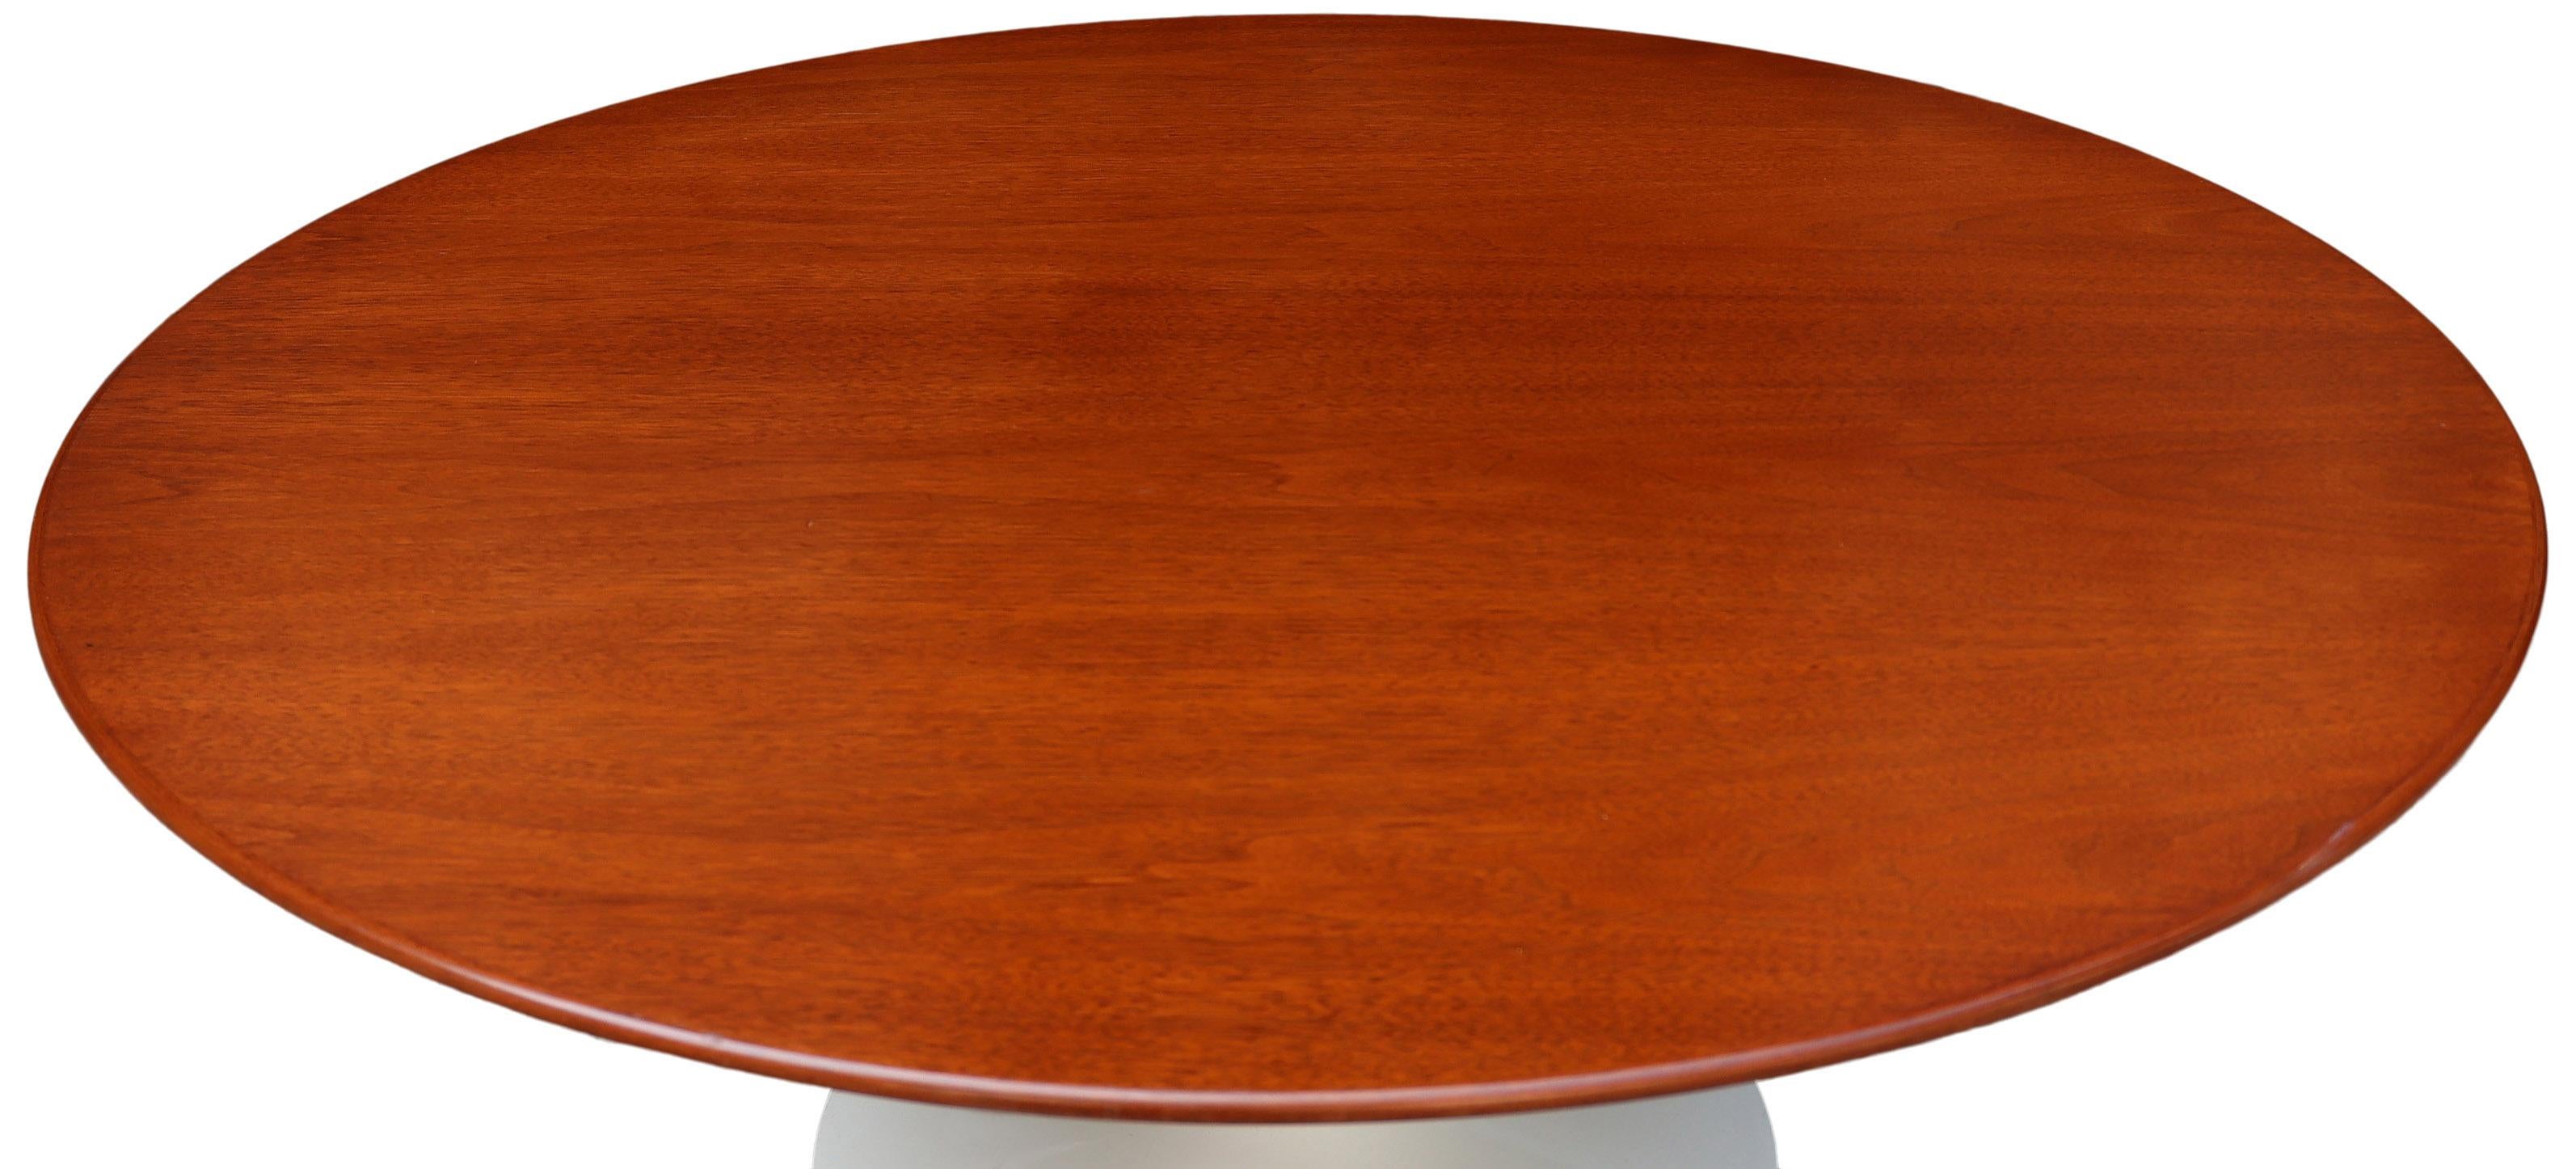 Eero Saarinen for Knoll Round Tulip Coffee Table 1